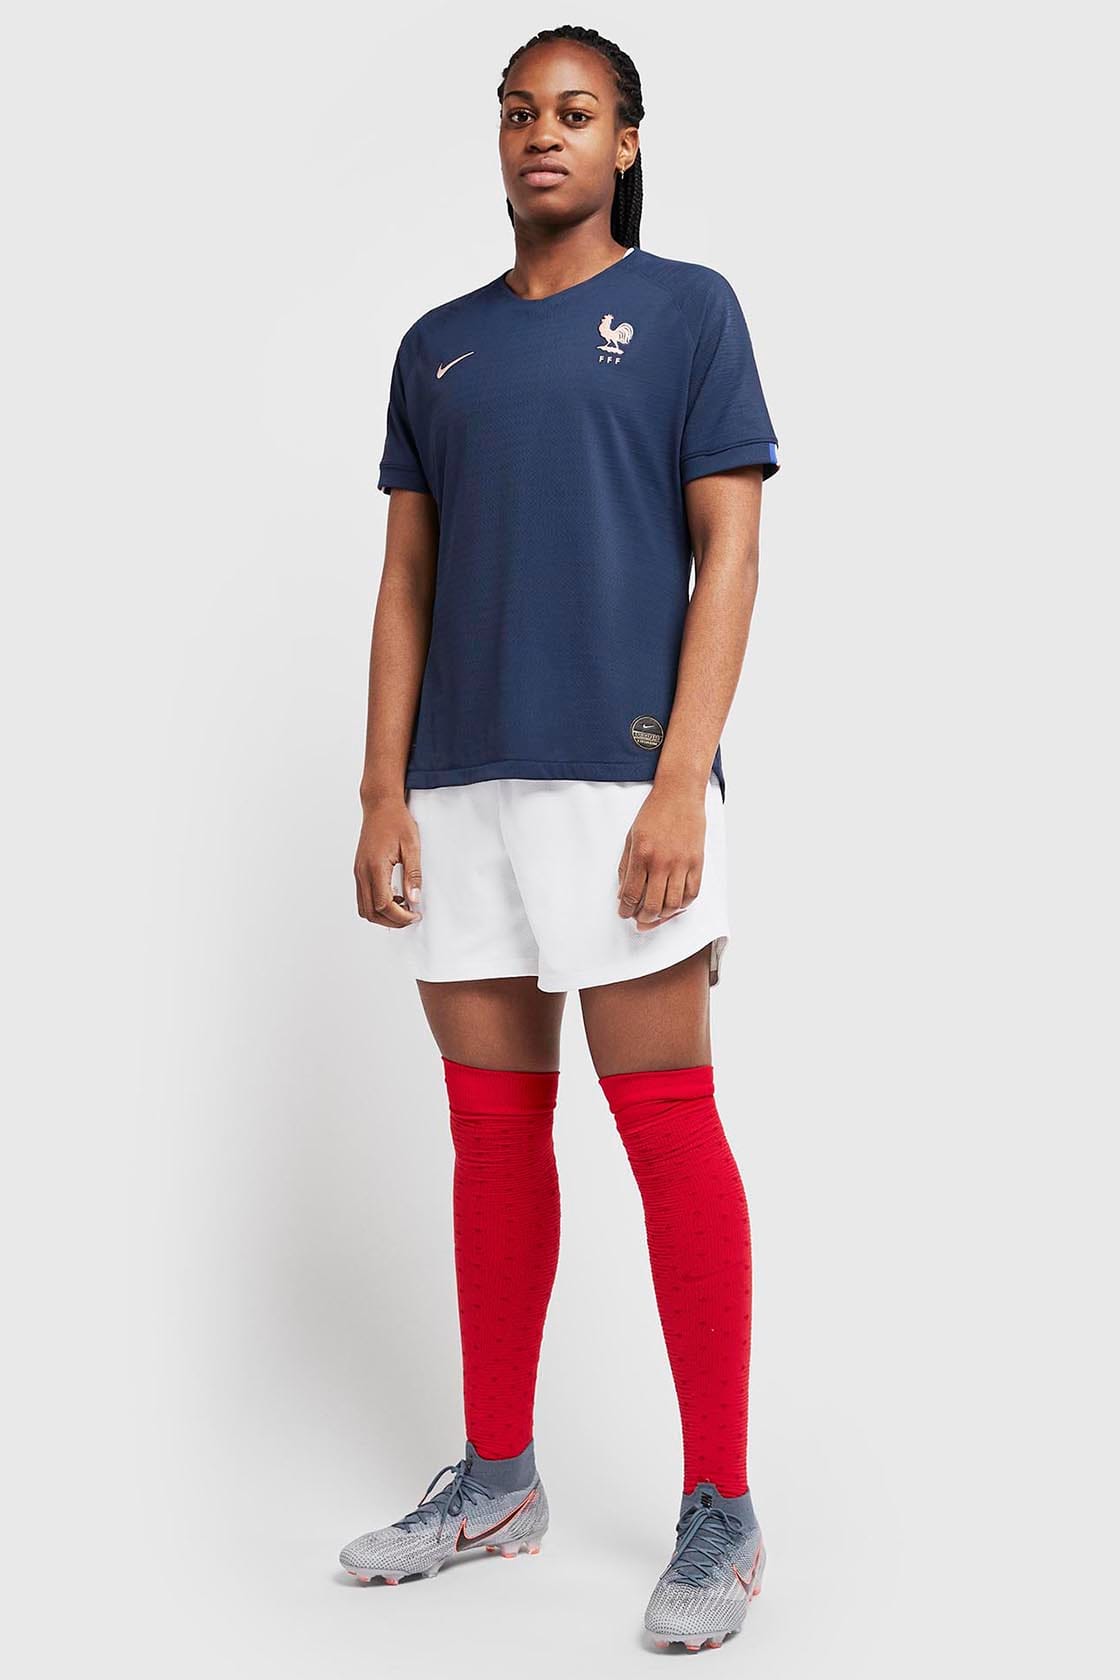 women's france soccer jersey 2019